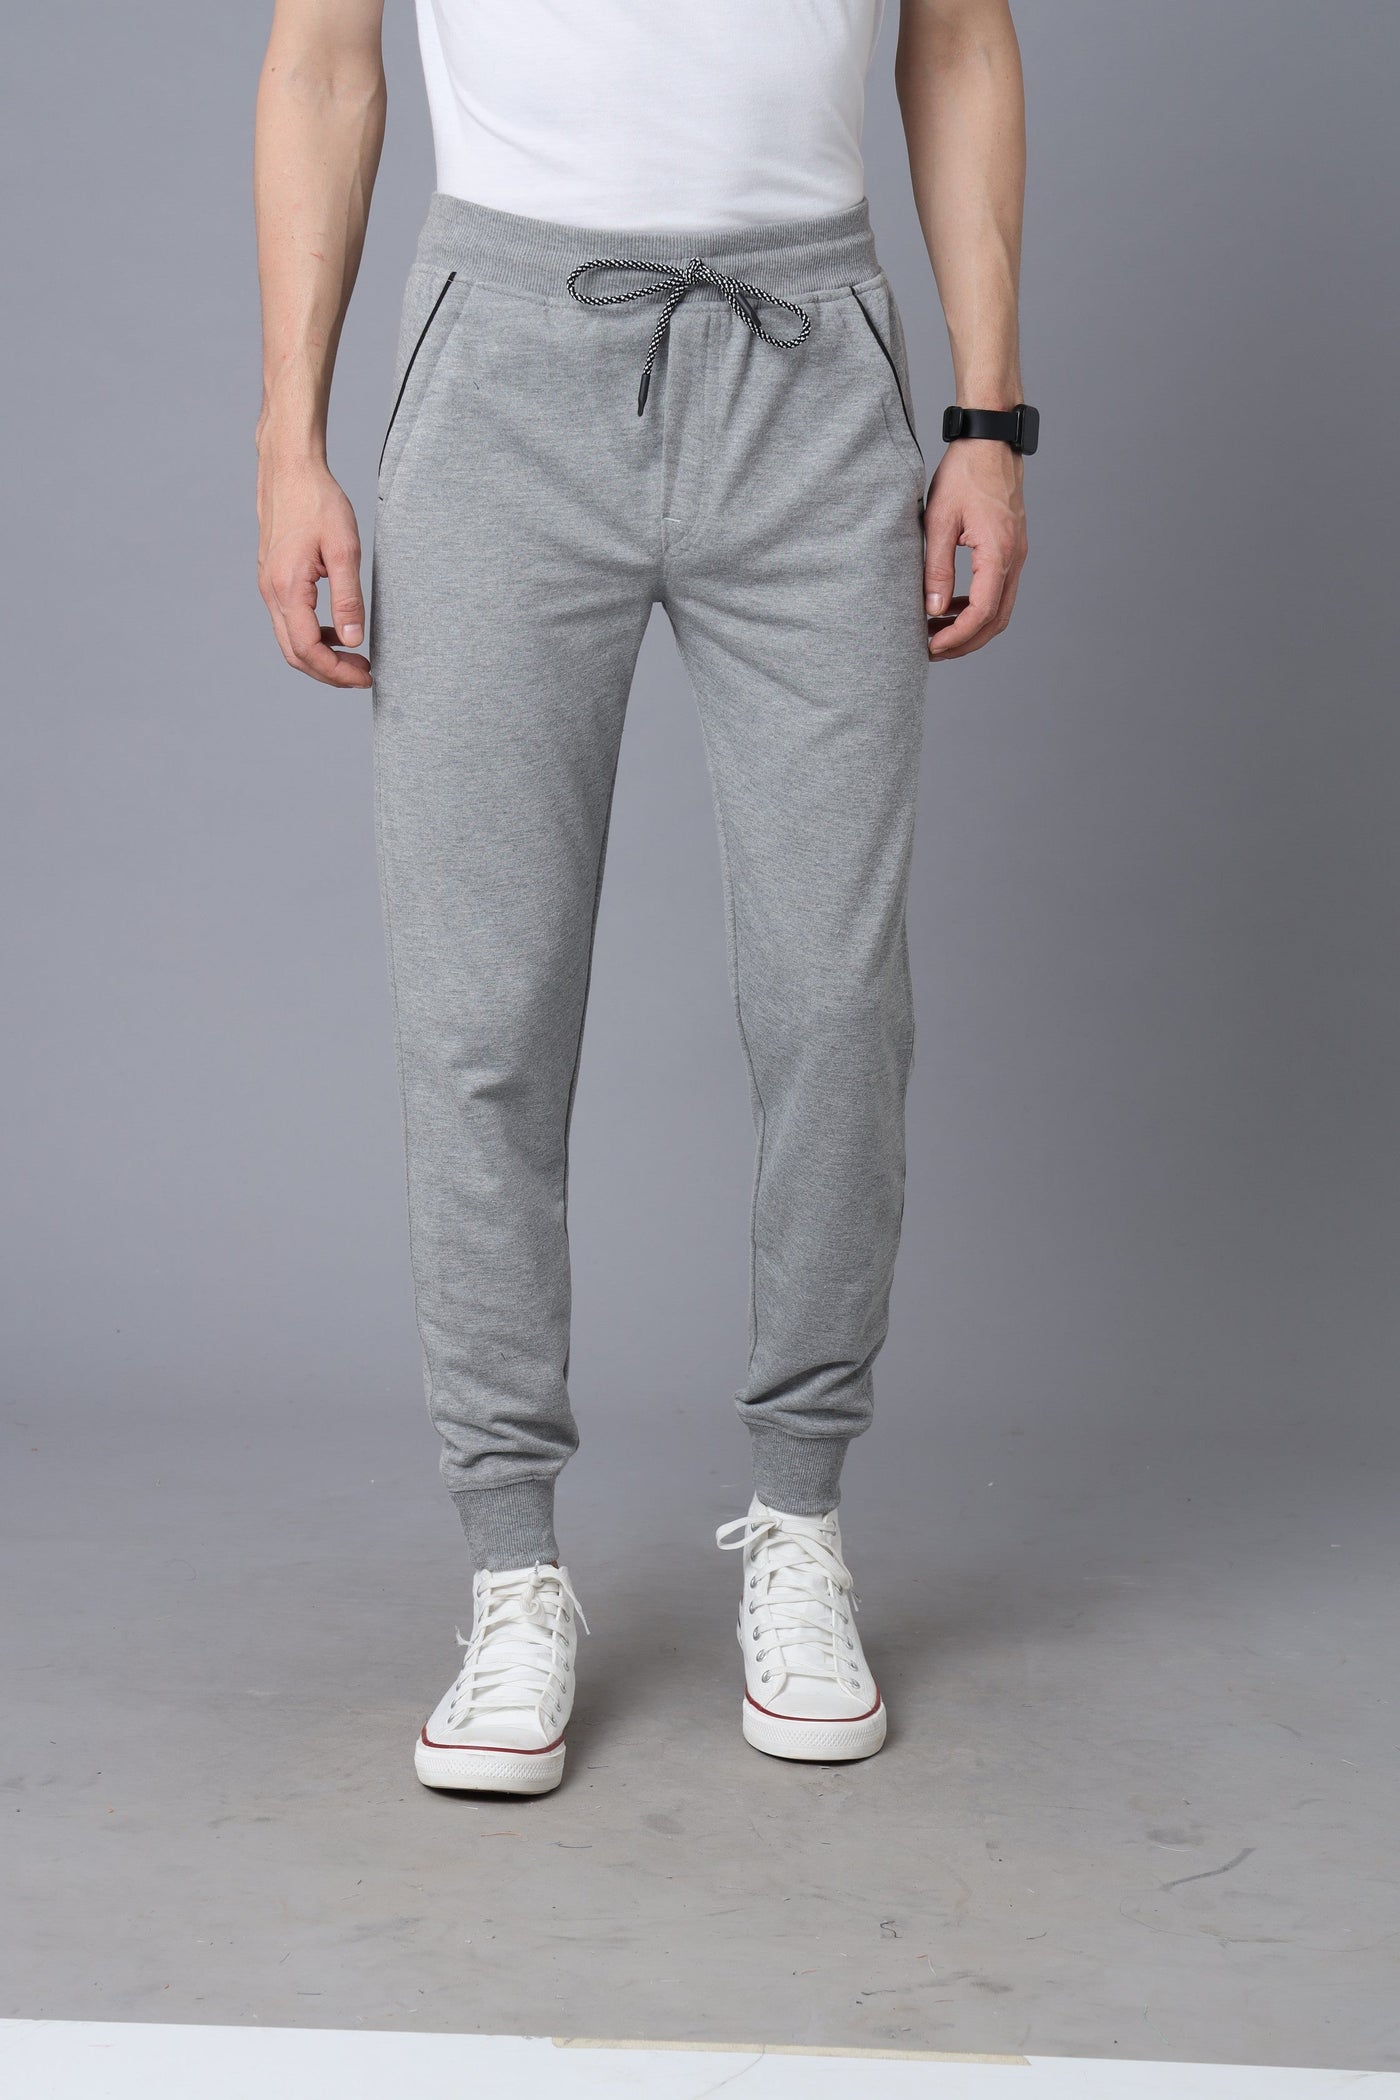 Grey track pants